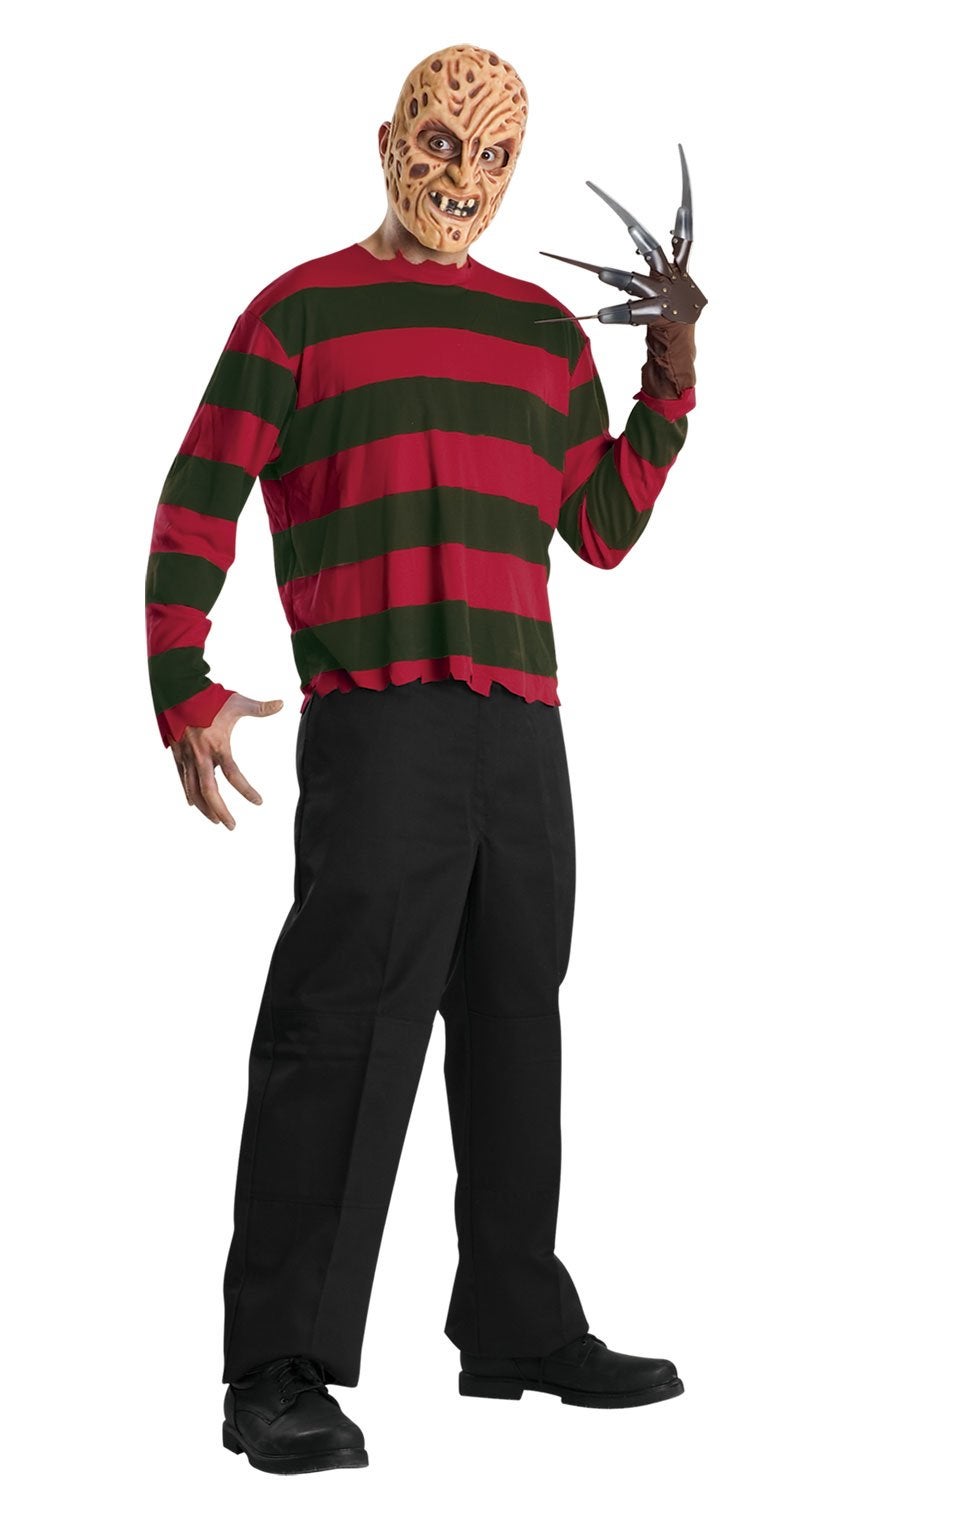 Freddy Krueger Costume Top & Mask for Adults - Warner Bros Nightmare on Elm St